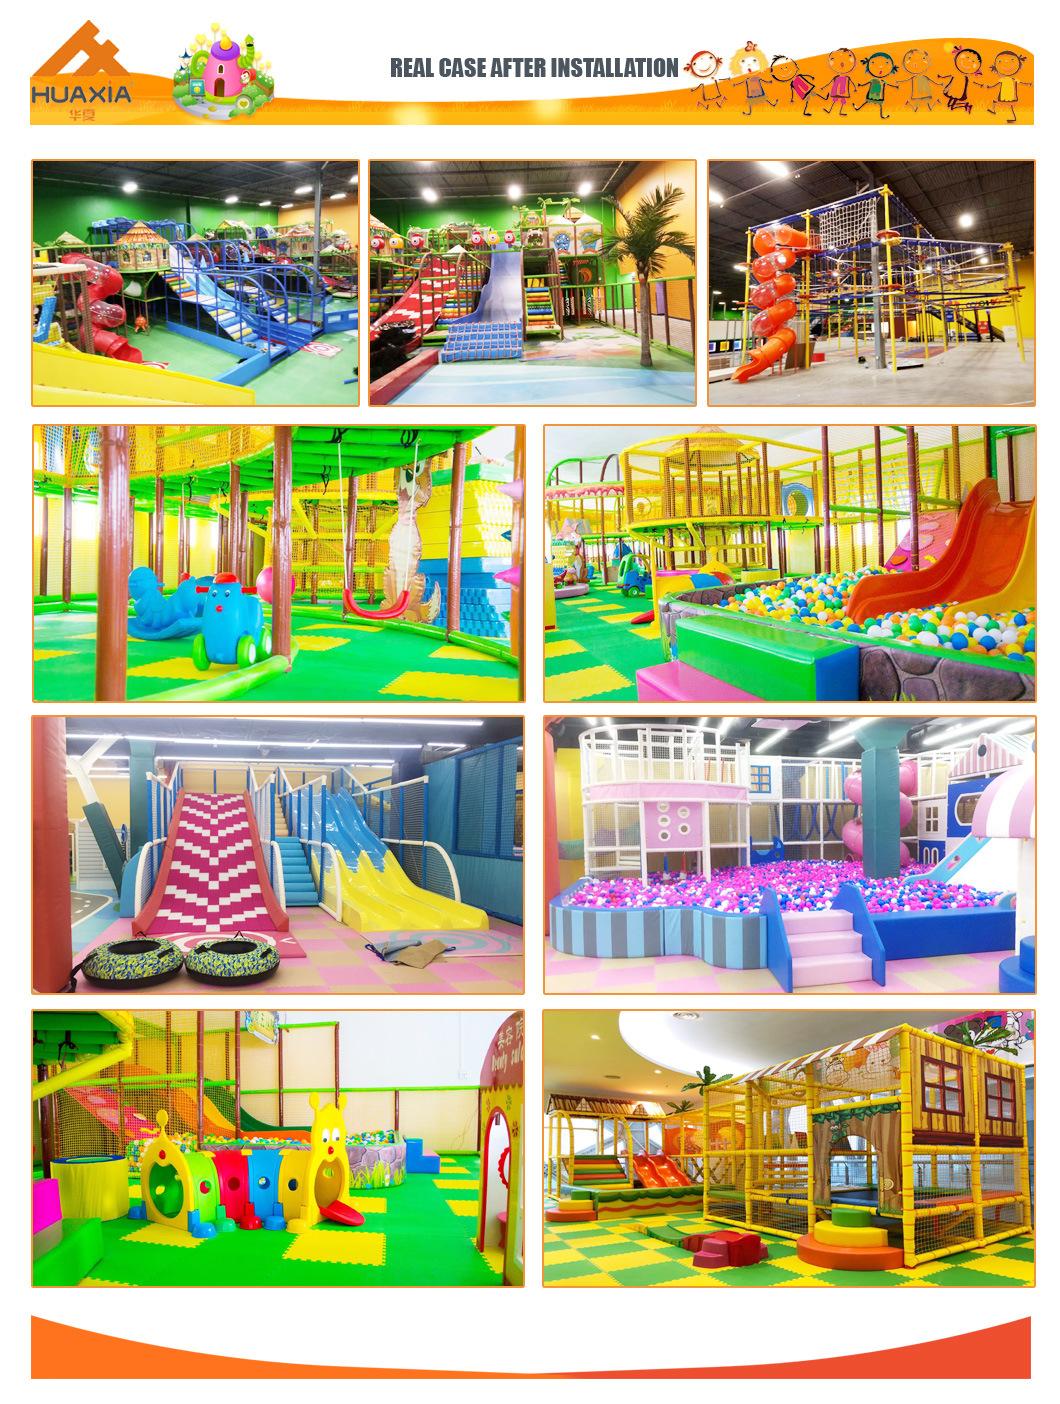 Hot Sale Amusement Equipment Multifunction Indoor Playground for Children